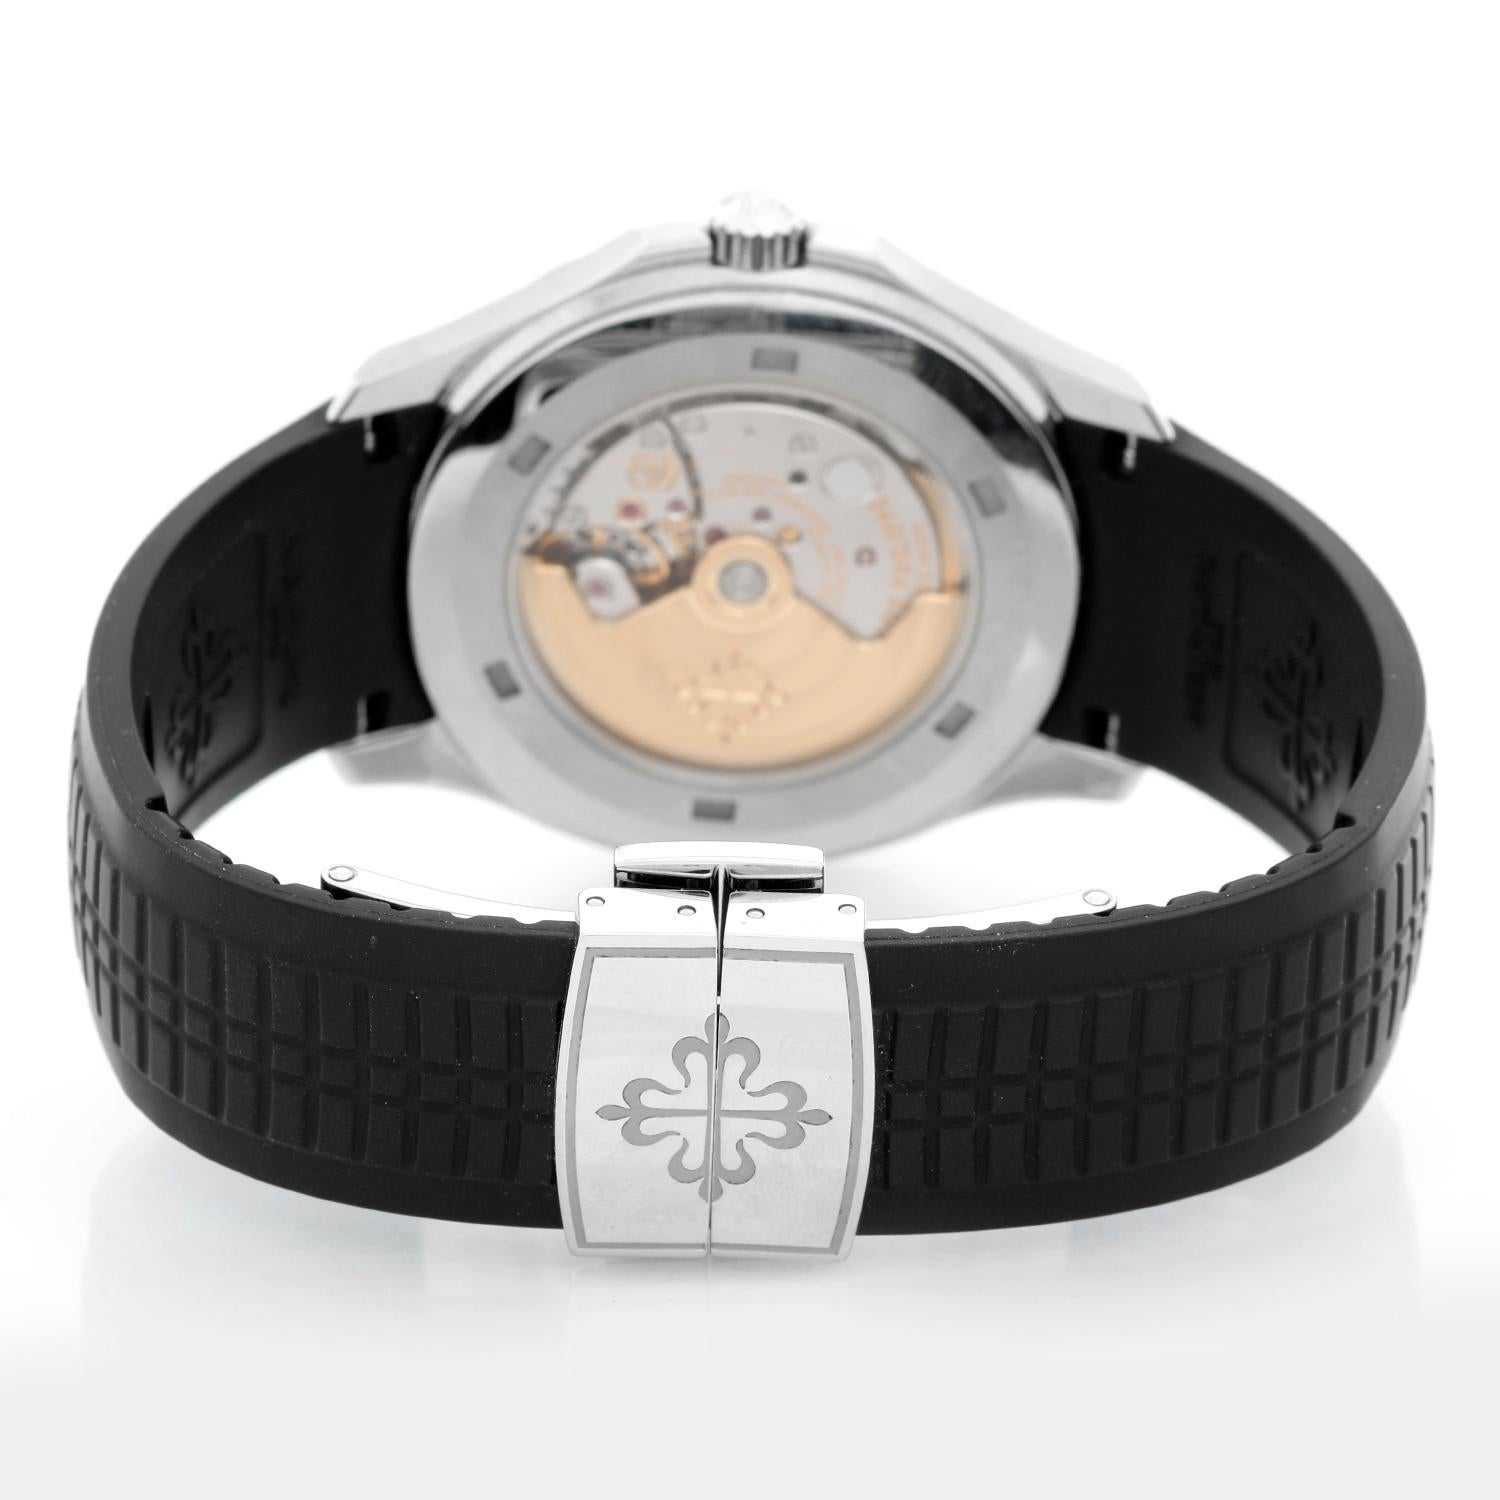 Patek Philippe Aquanaut Men's Stainless Steel Watch 5167A - 001 1